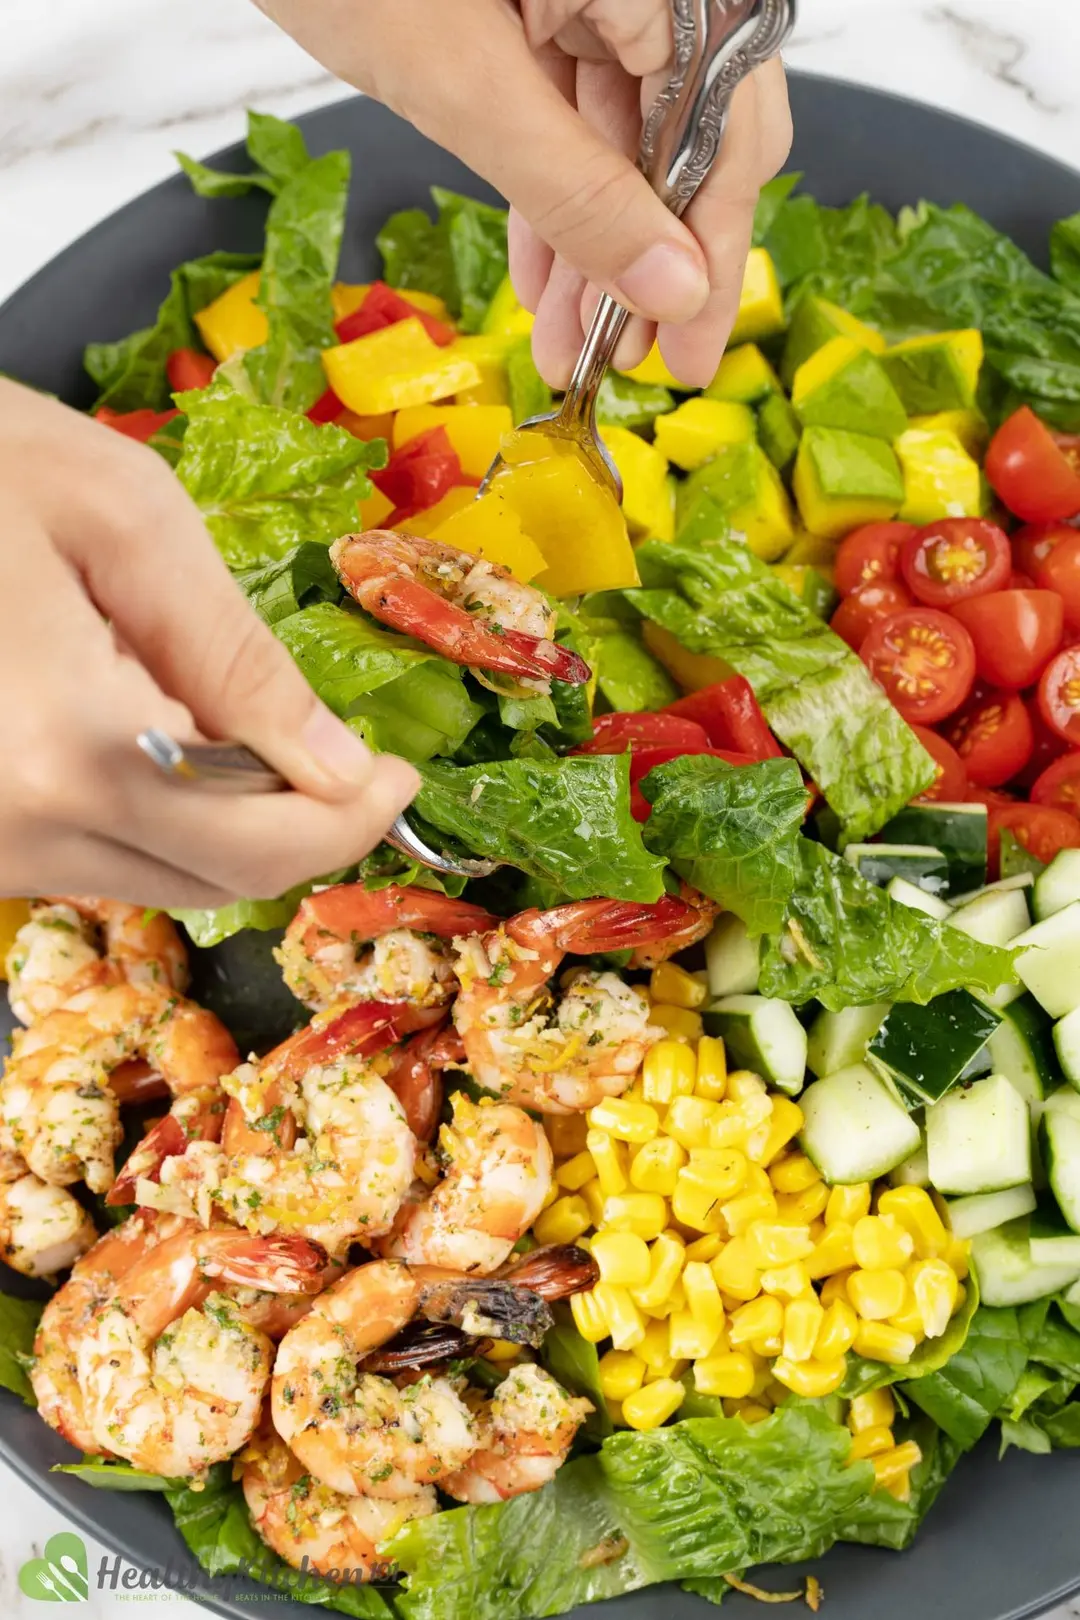 Is Shrimp Salad Healthy